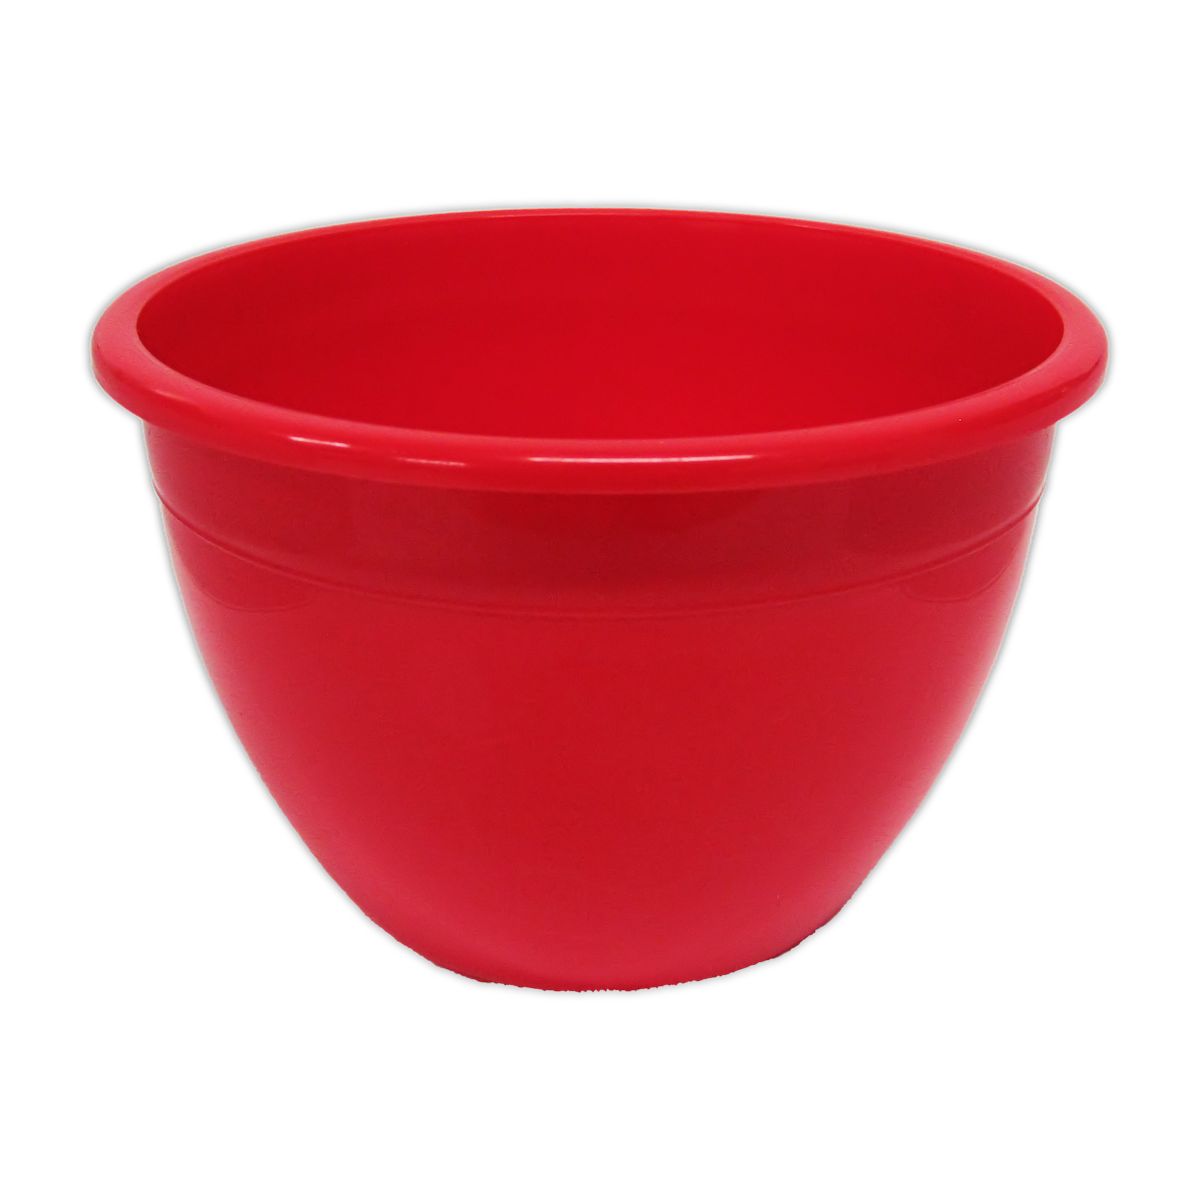 PUDB1125 - 1lb Red Pudding Bowl x 25